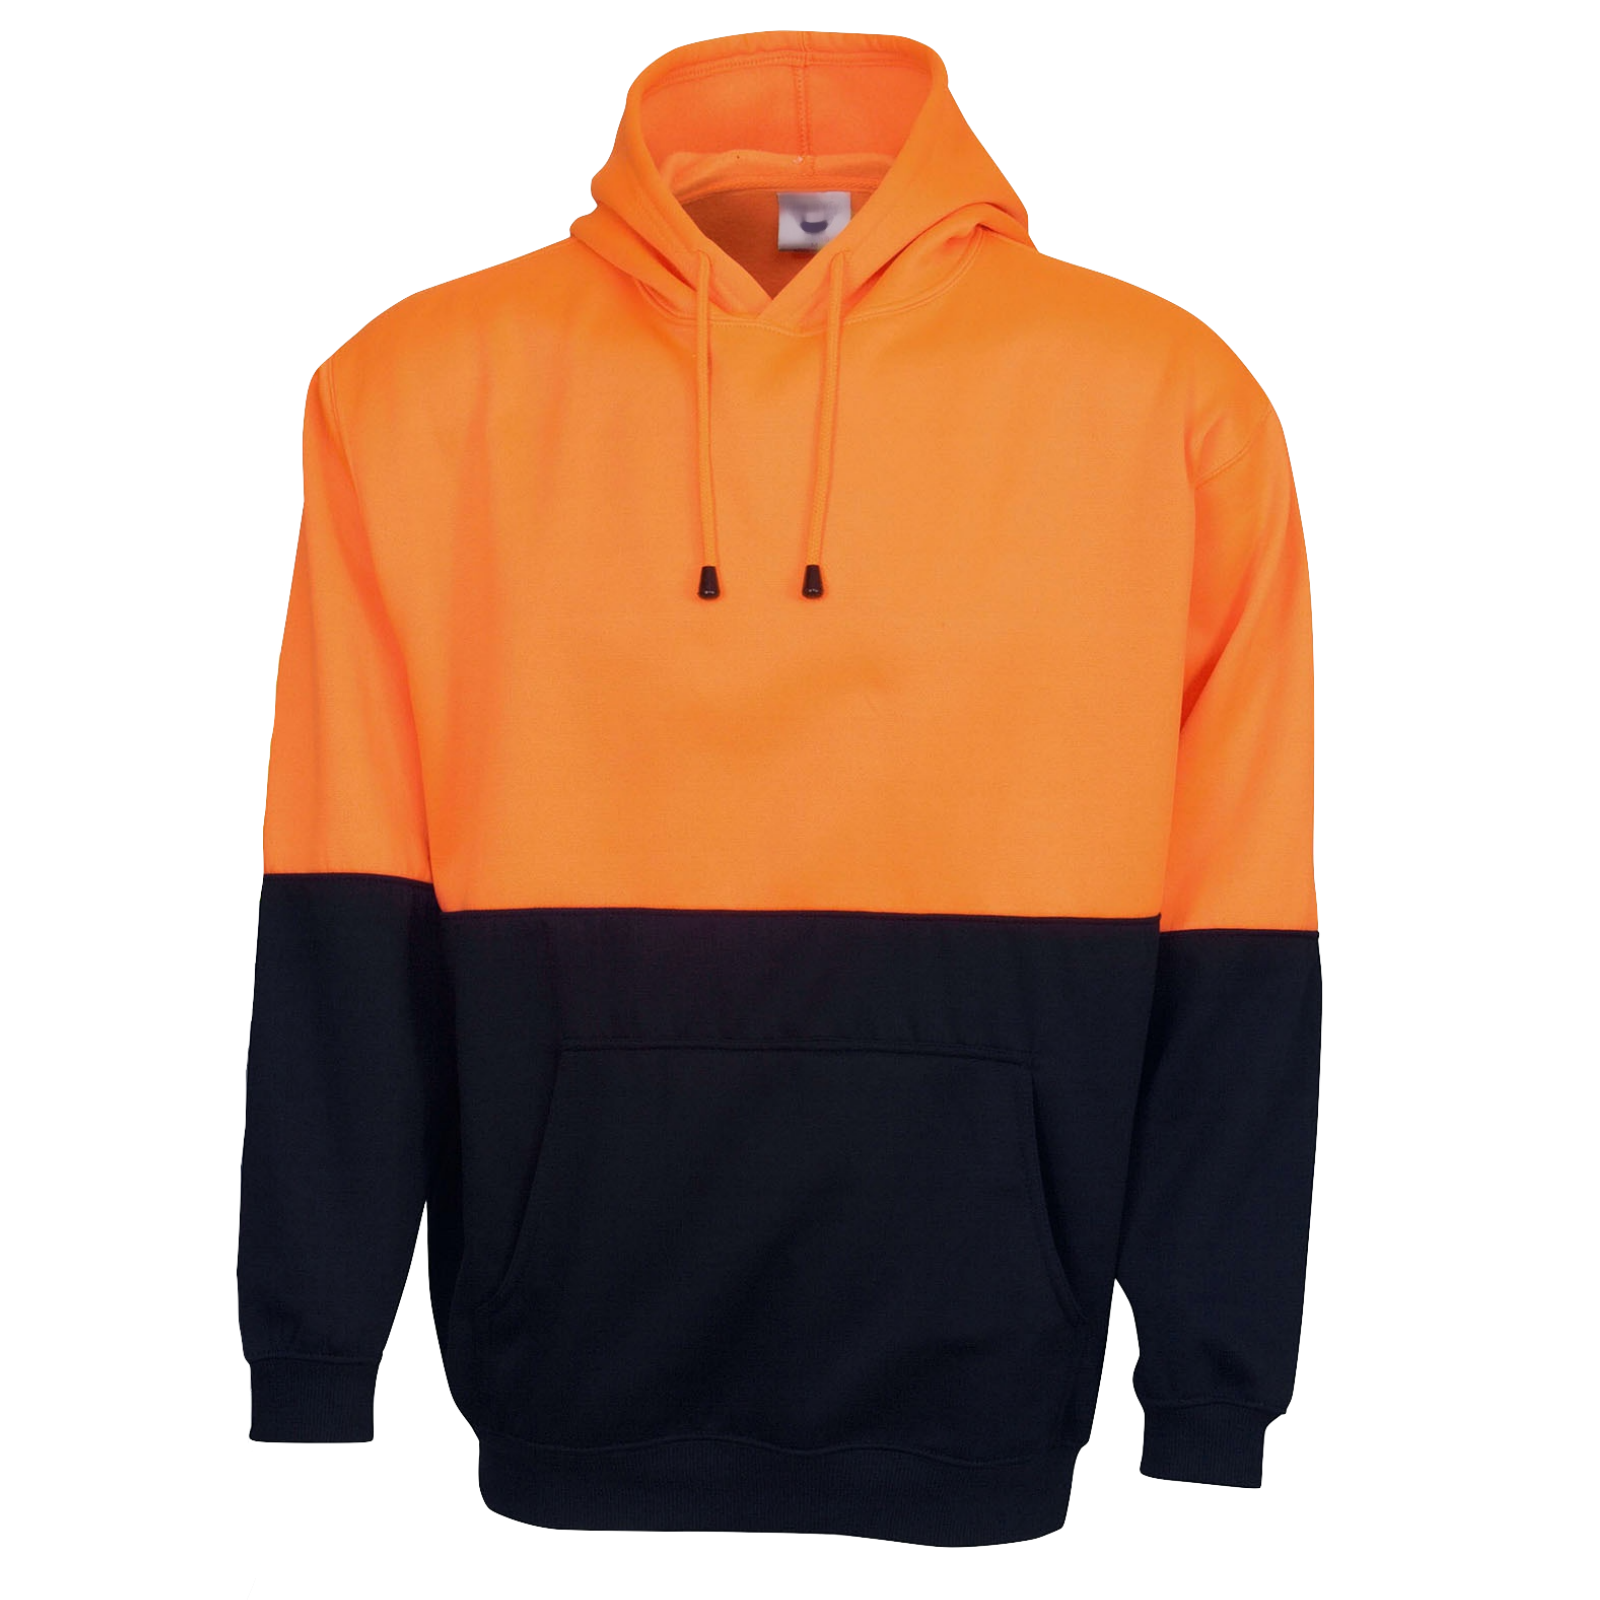 HI VIS POLAR FLEECE HOODIE Jumper Safety Workwear Fleecy Jacket Unisex - Orange - 3XL